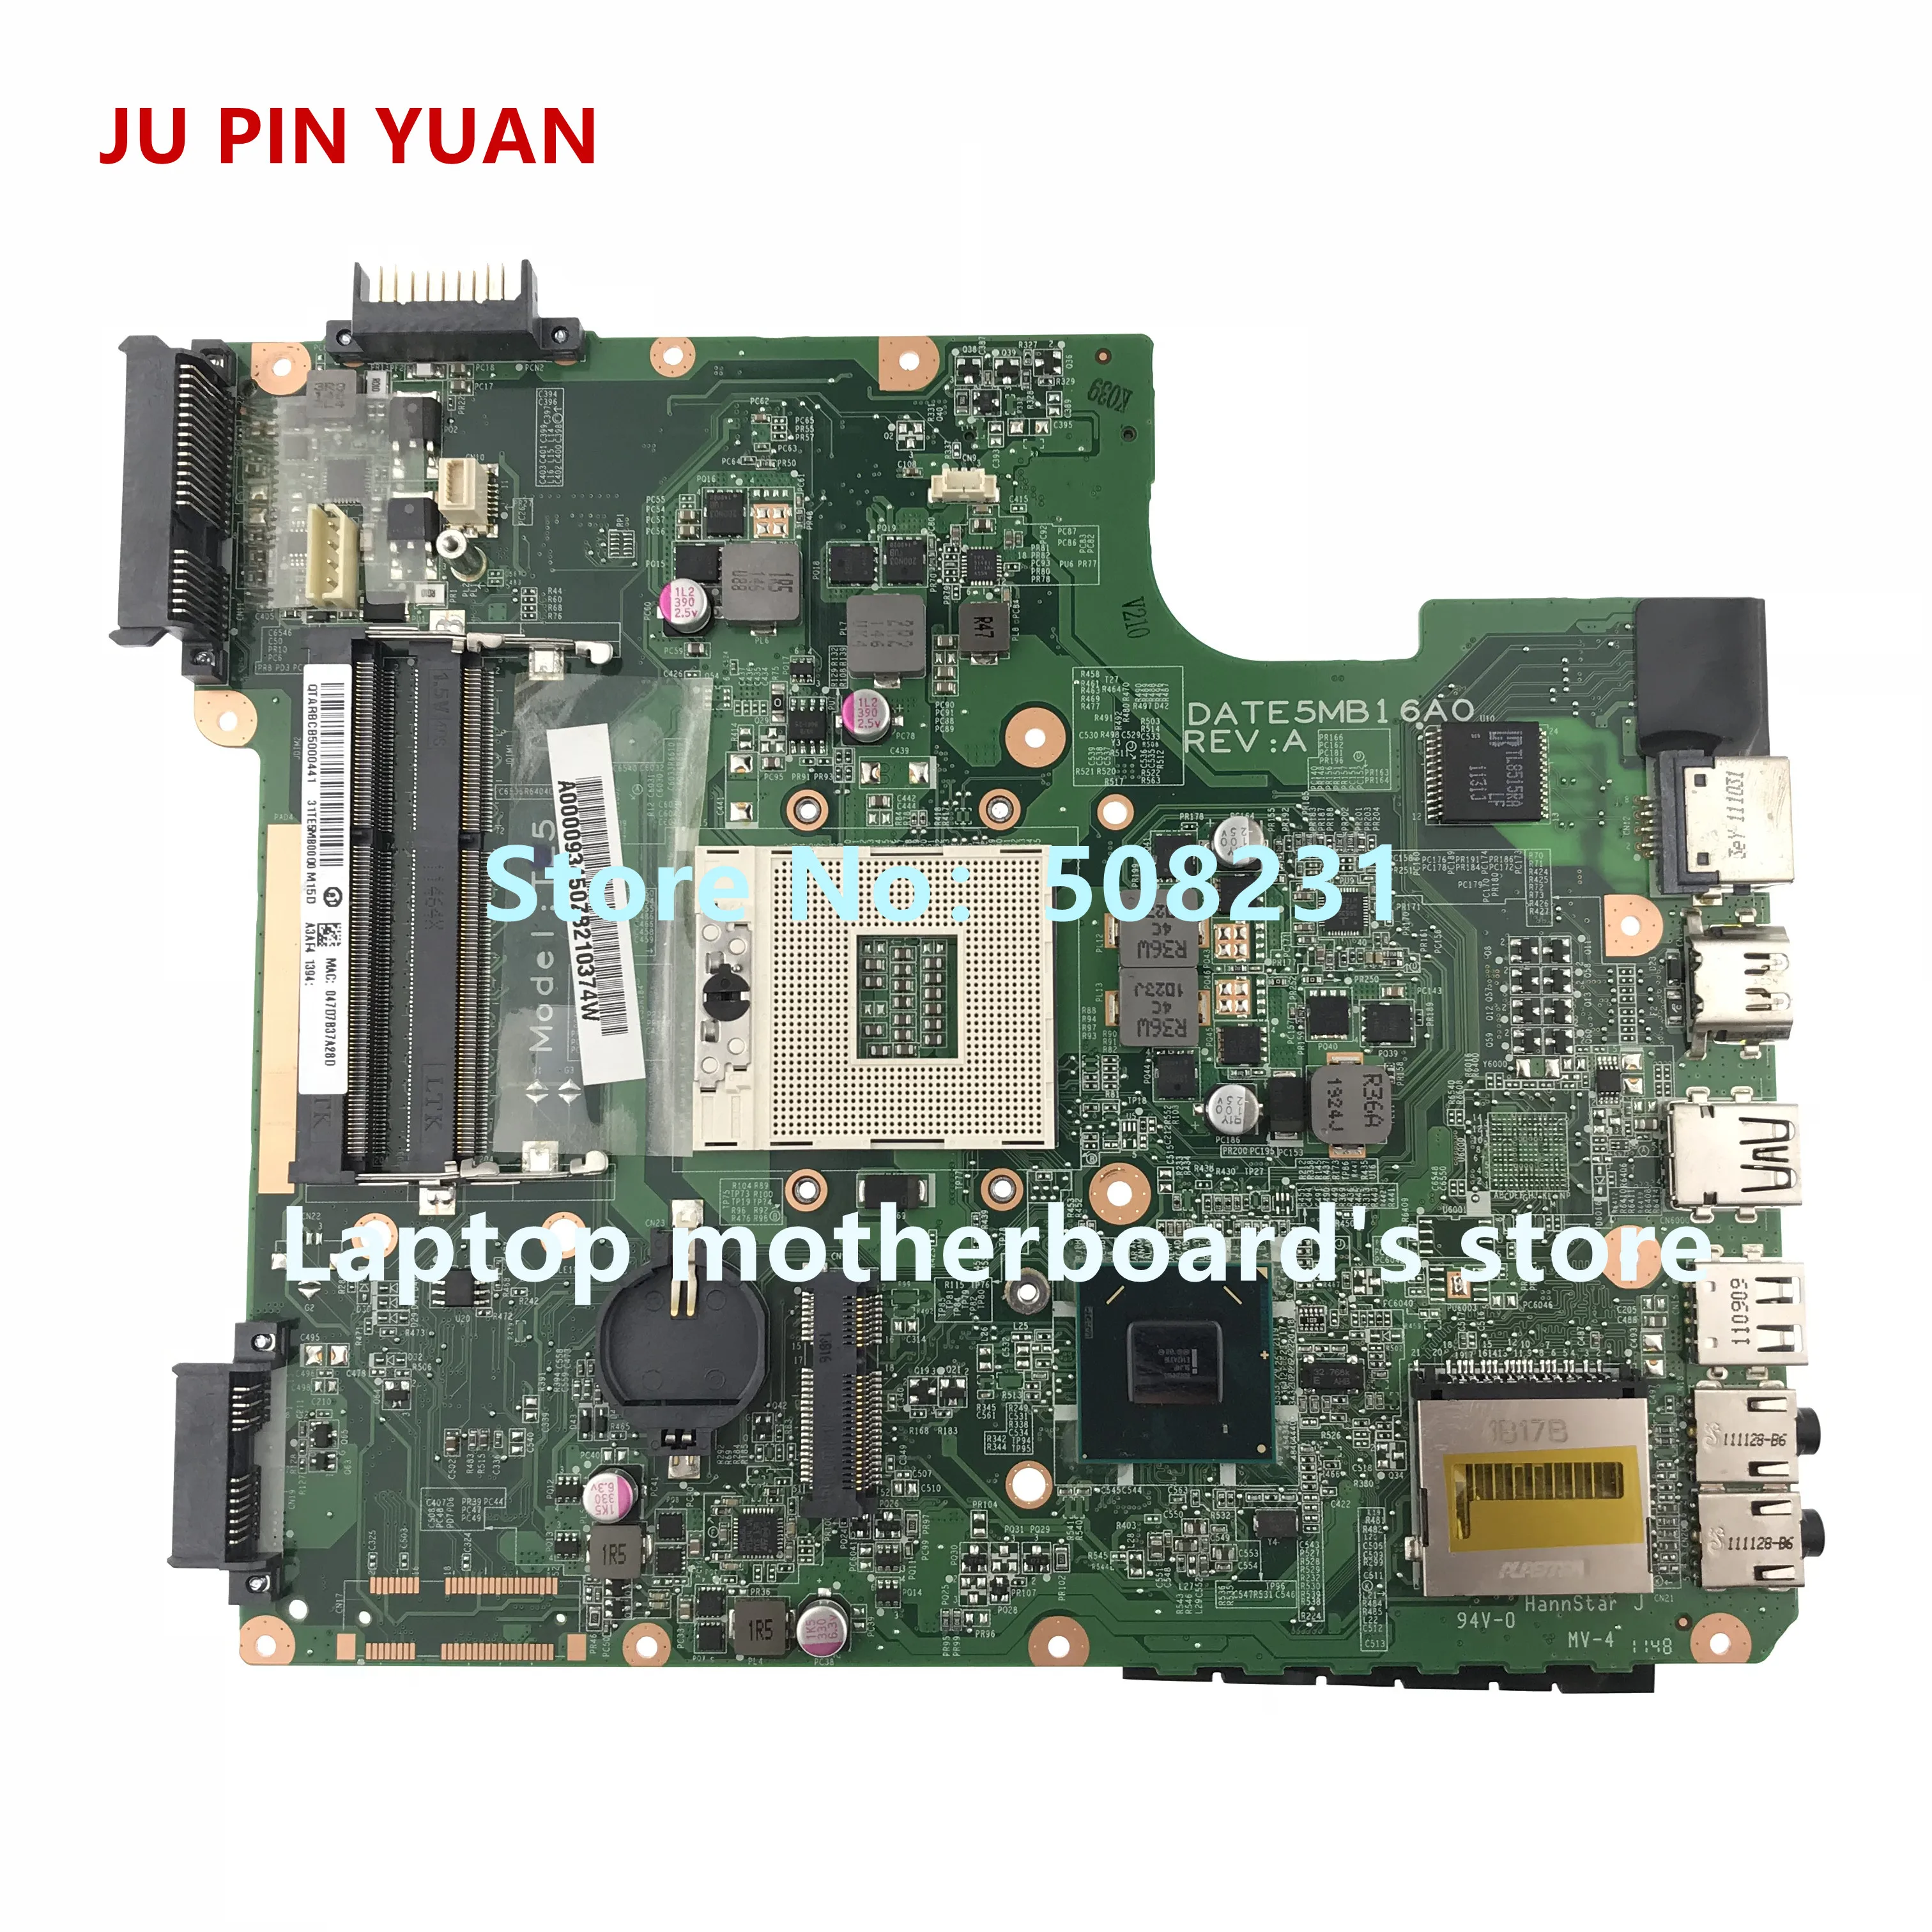 

JU PIN YUAN A000093450 DATE5MB16A0 материнская плата для ноутбука Toshiba satellite L740 L745 материнская плата HM65 все функции полностью протестированы